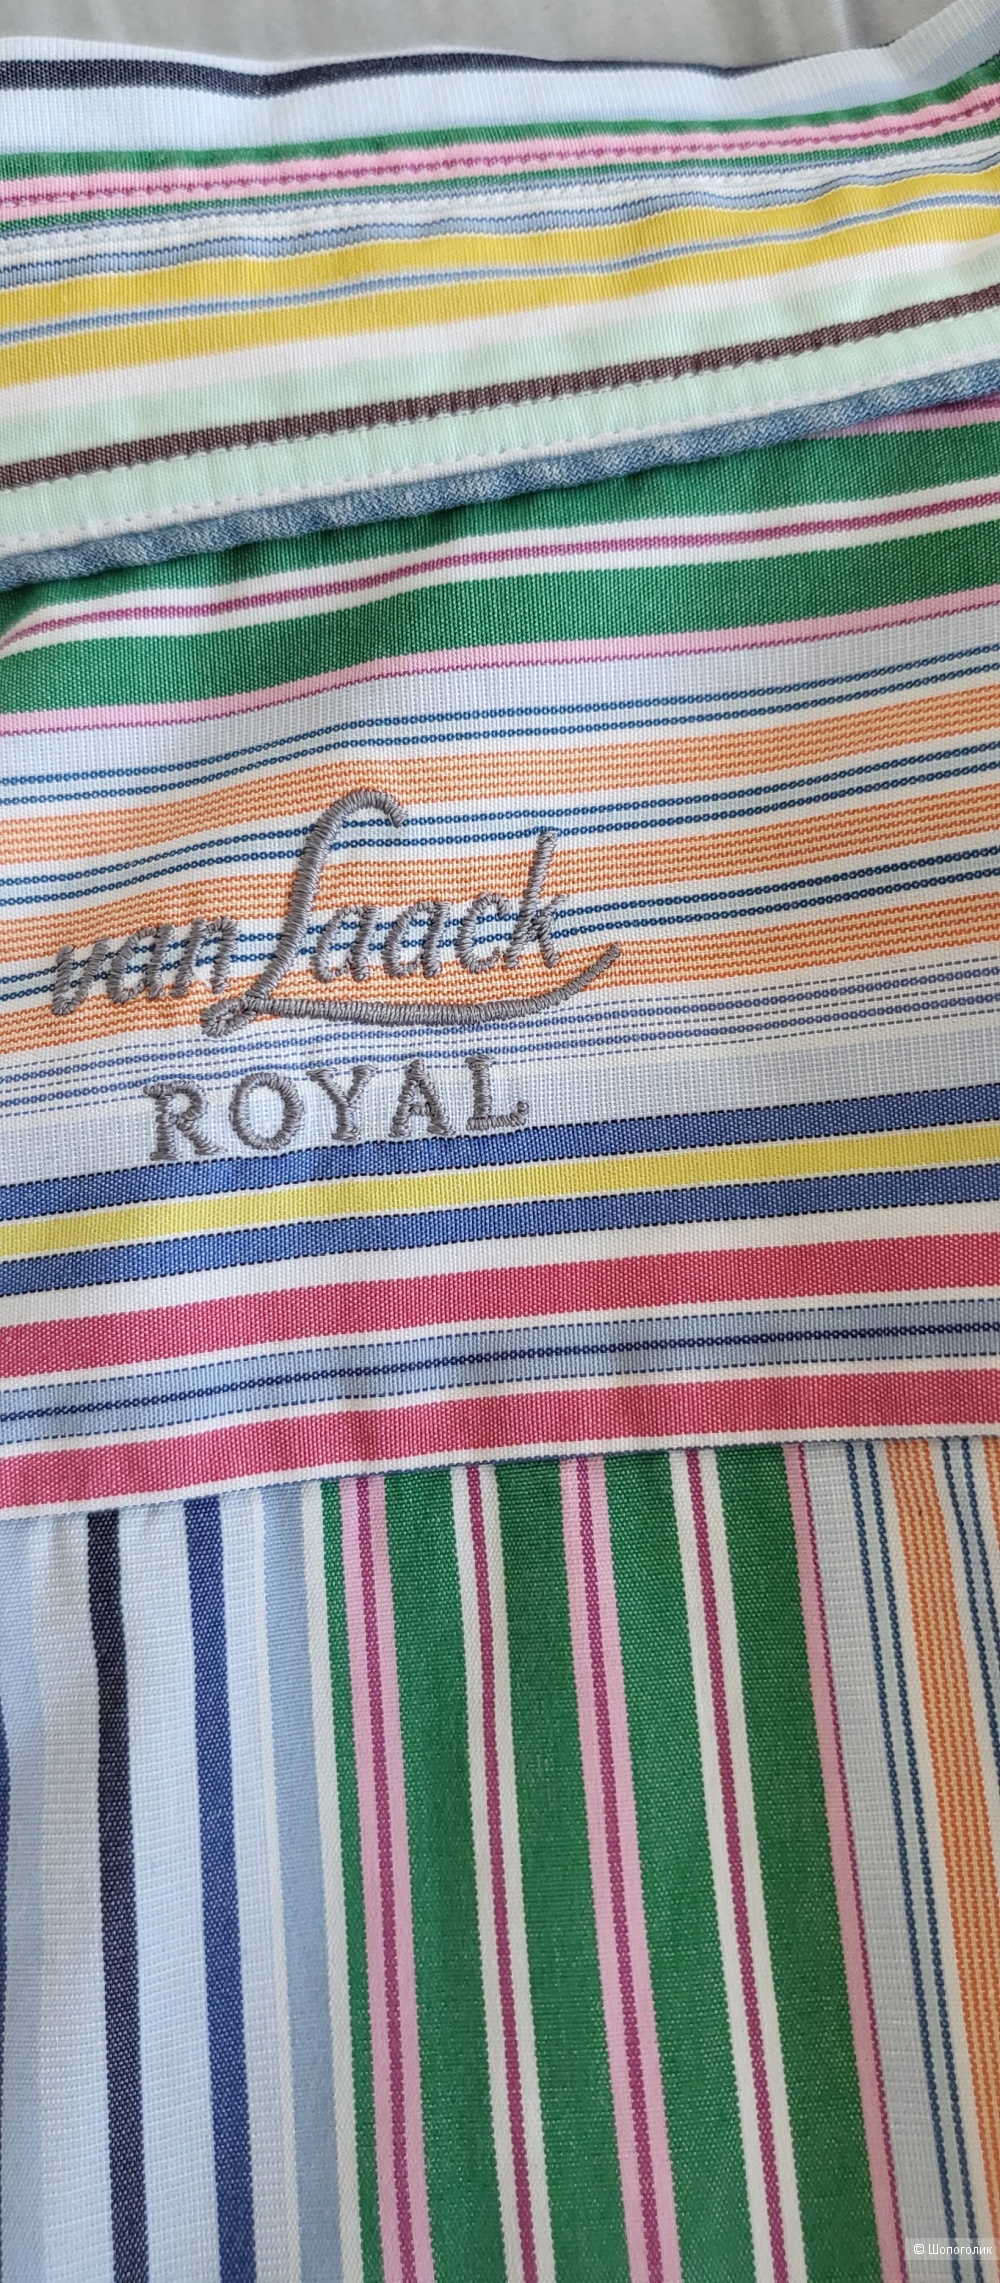 Рубашка Van Laack royal, L, 50